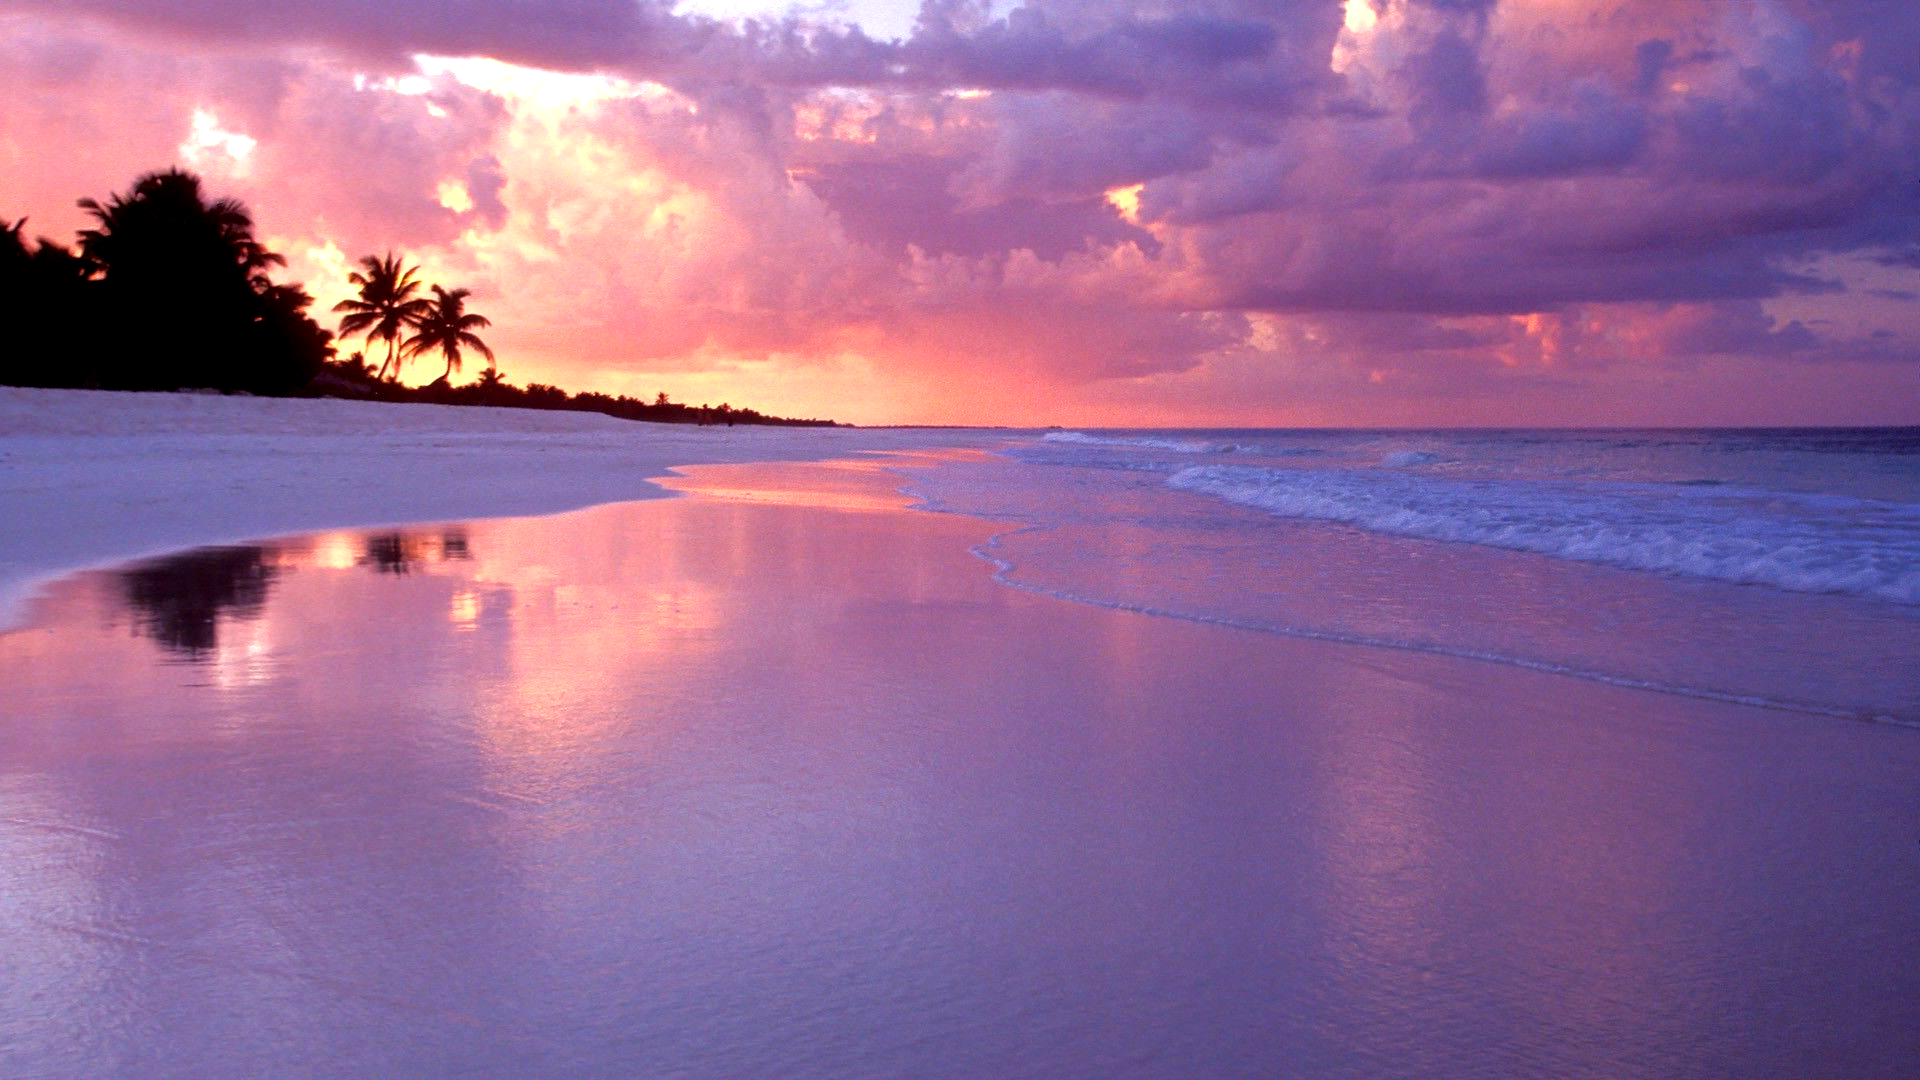 Beautiful Beach Sunset Wallpaper 1920x Sunset Beach is amazing HD wallpaper for desk. Sunset wallpaper, Beach sunset wallpaper, Beautiful sunset